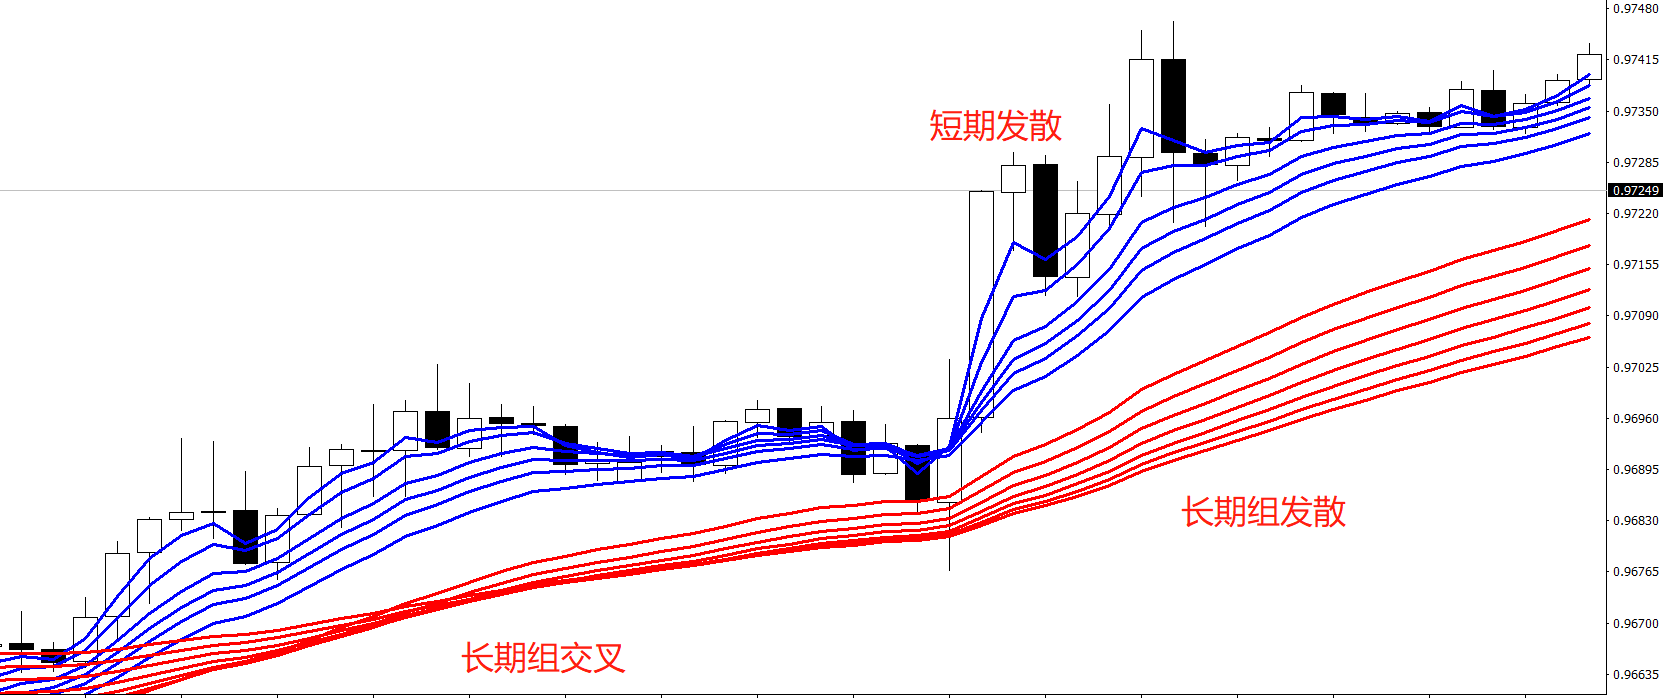 GKFXPrimeJiekai Finance: A Sharp Tool for Foreign Exchange Trend Trading---knowGMMAGubi Moving Average (Below)674 / author:GKFXPrimeJiekai / PostsID:1544981